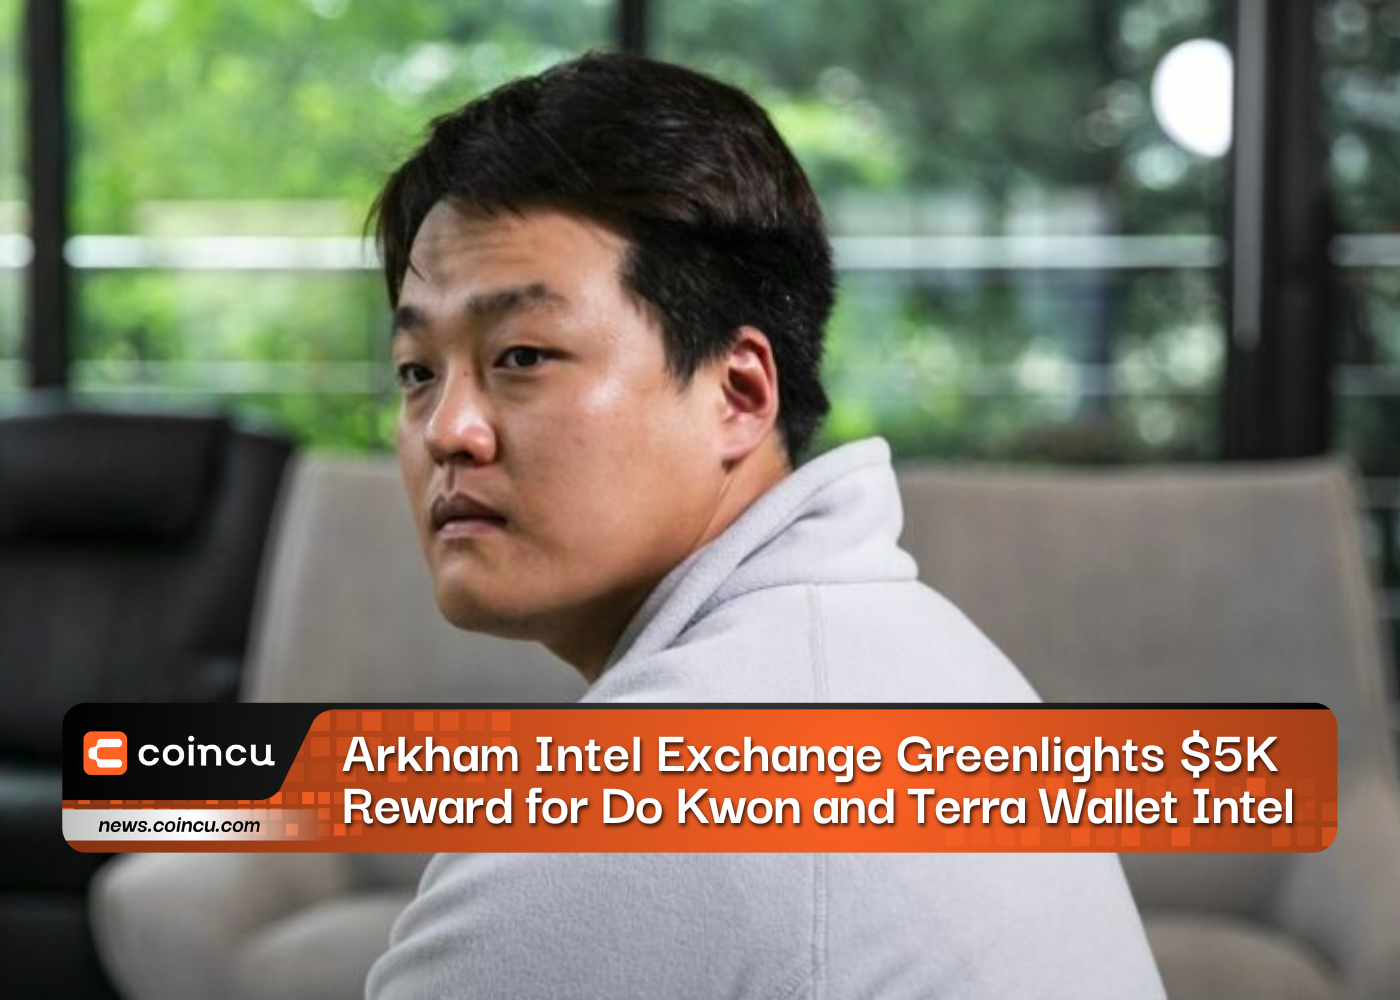 Arkham Intel Exchange Greenlights 5K